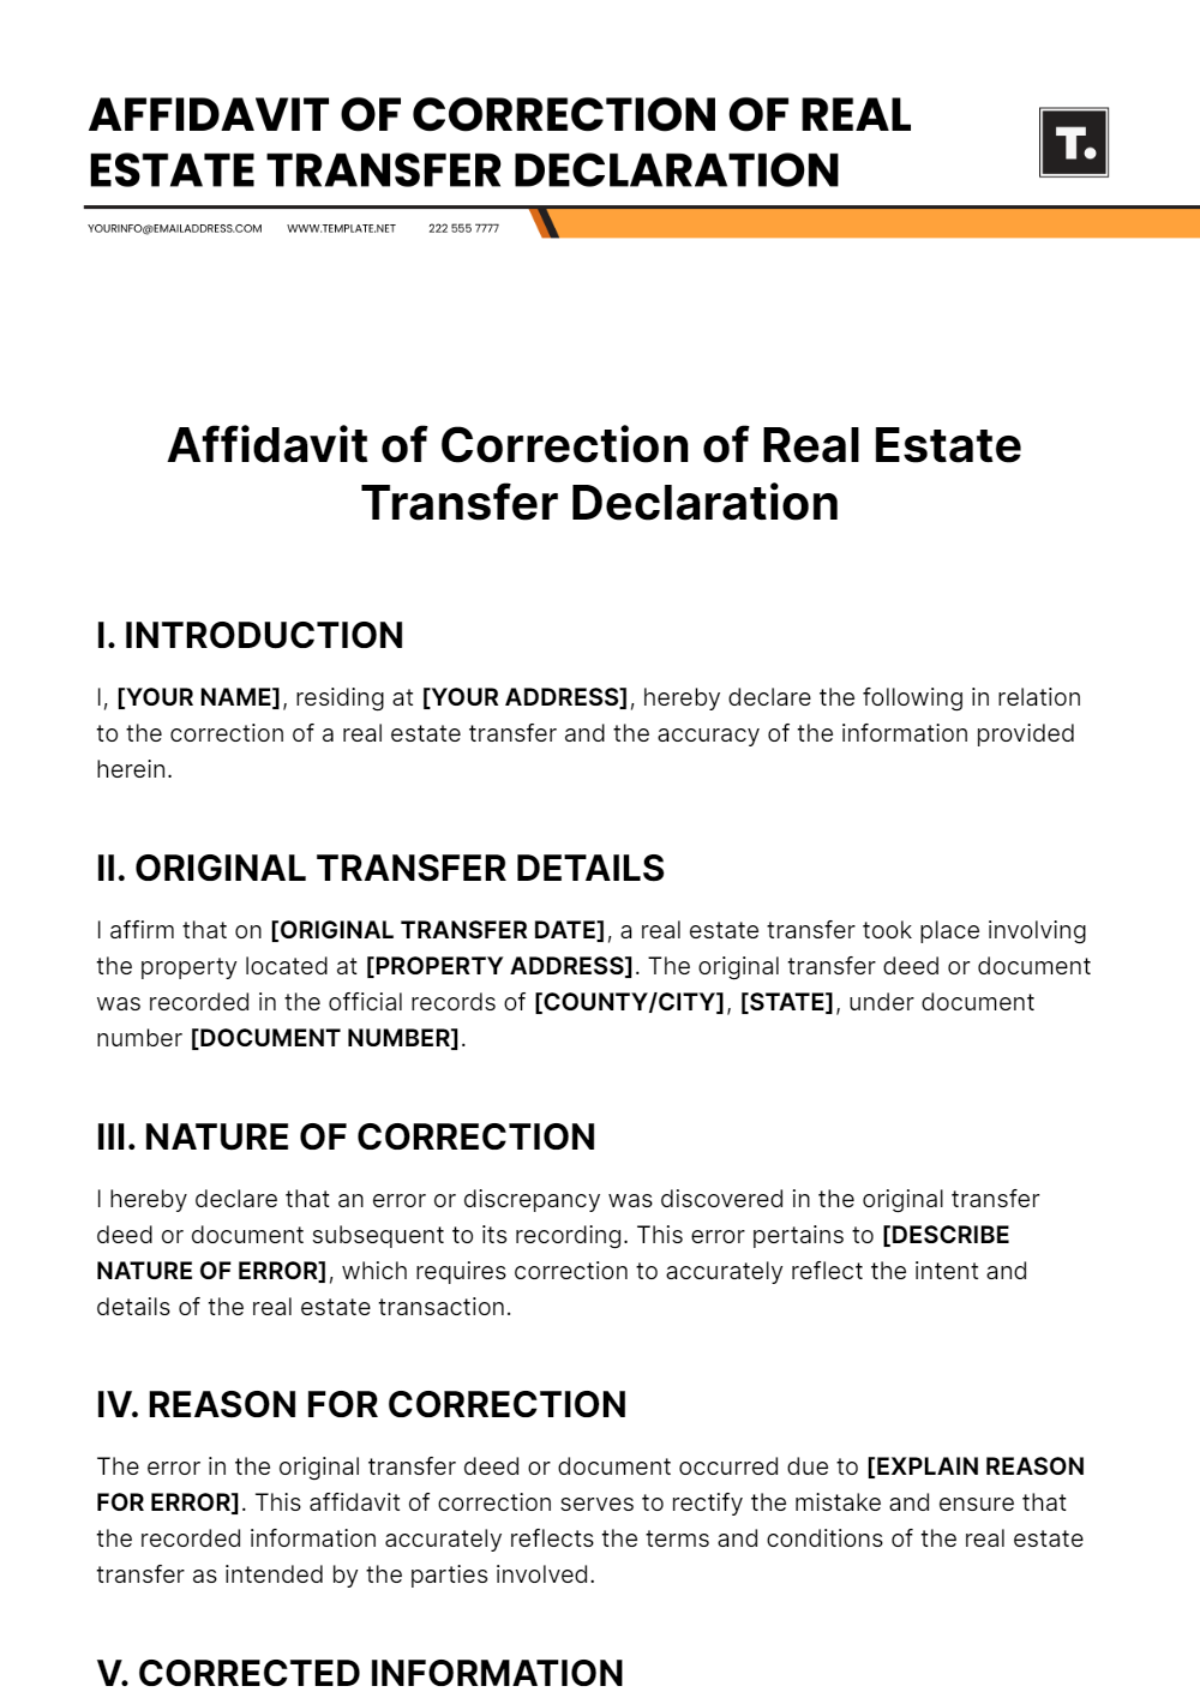 Affidavit of Correction of Real Estate Transfer Declaration Template